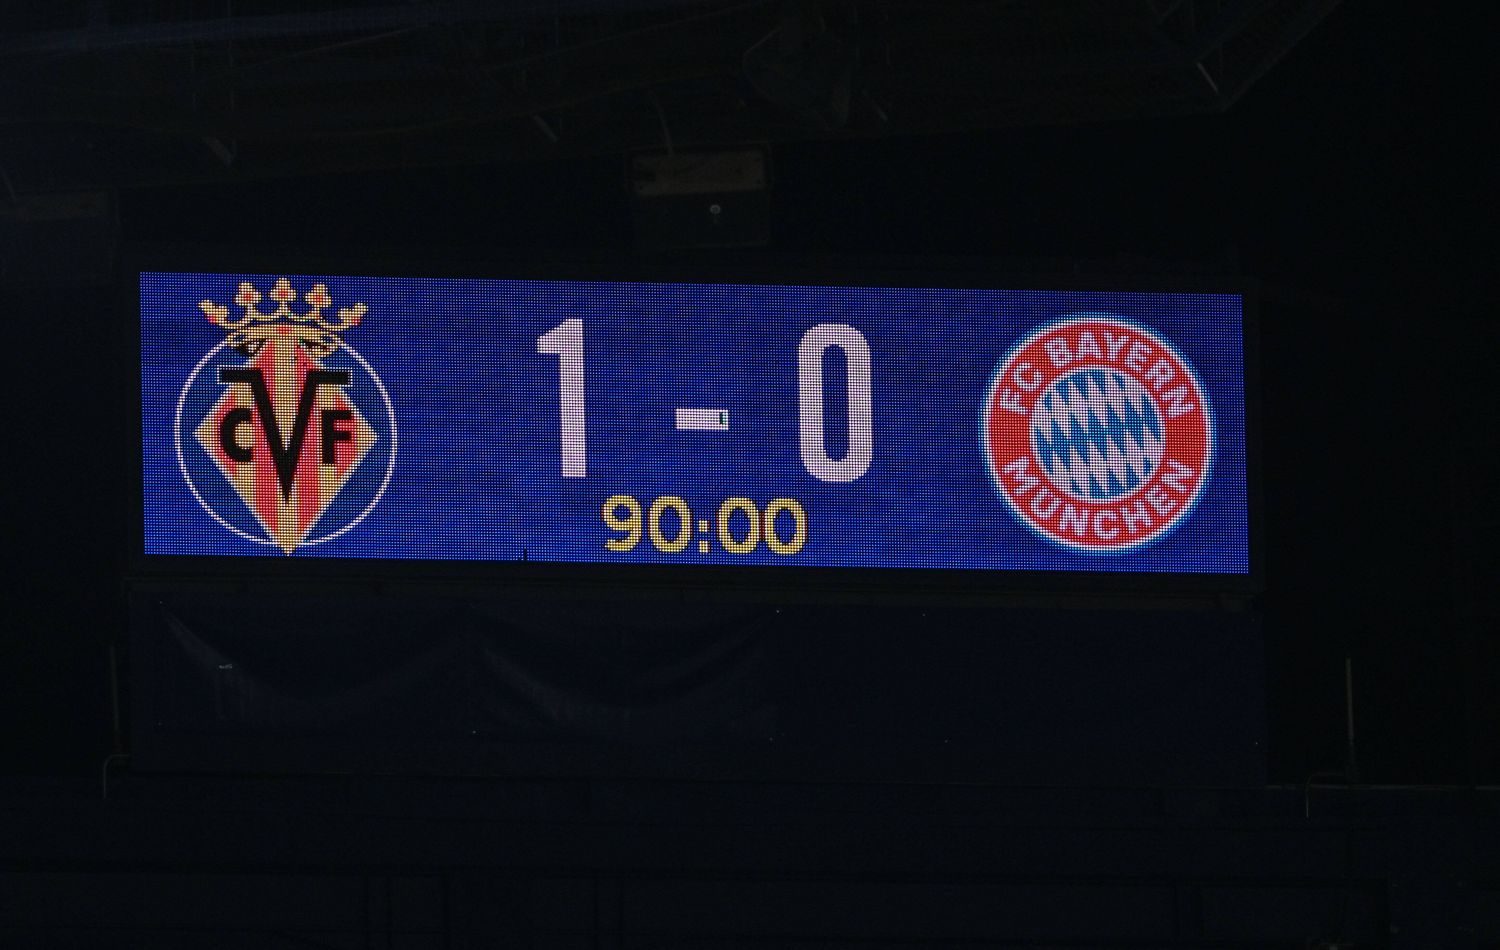 FC Bayern vs. FC Villarreal